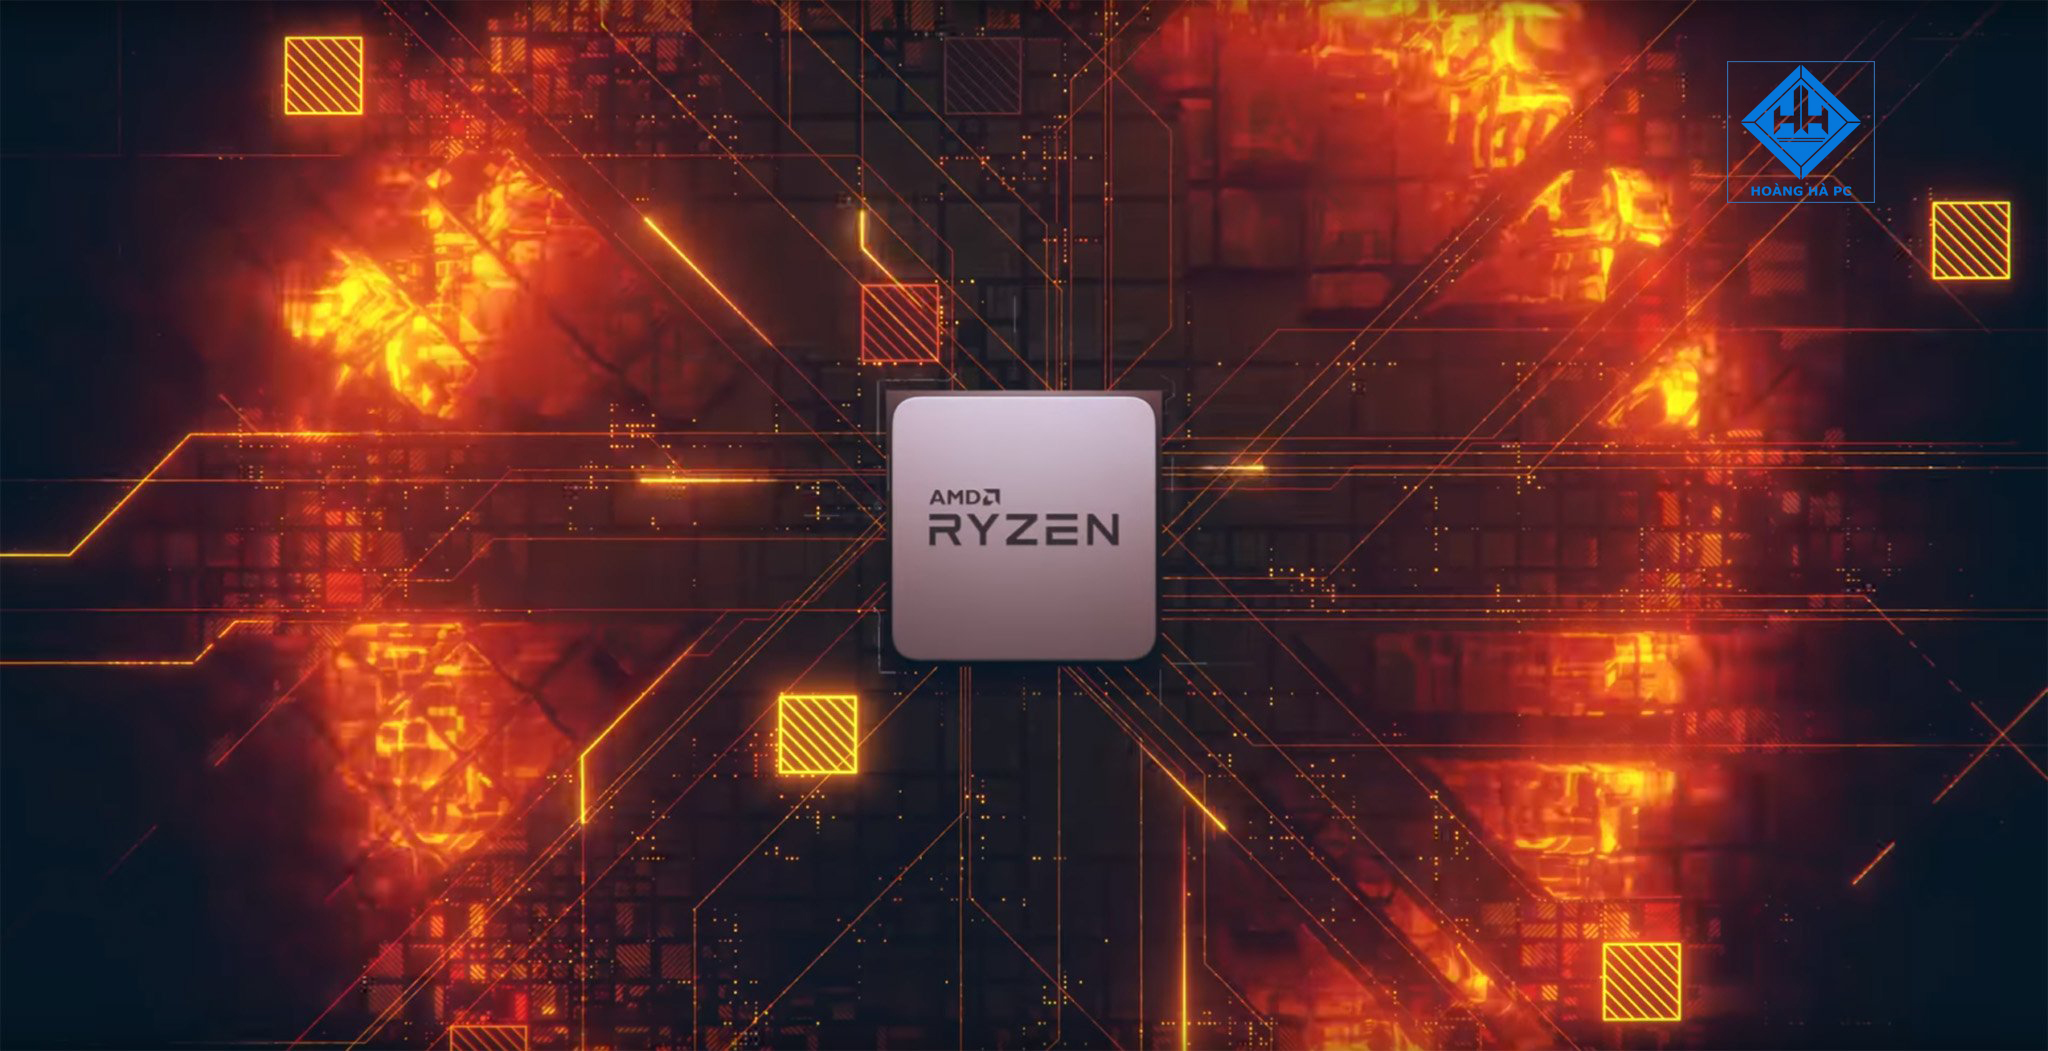 CPU AMD Ryzen 5 3500